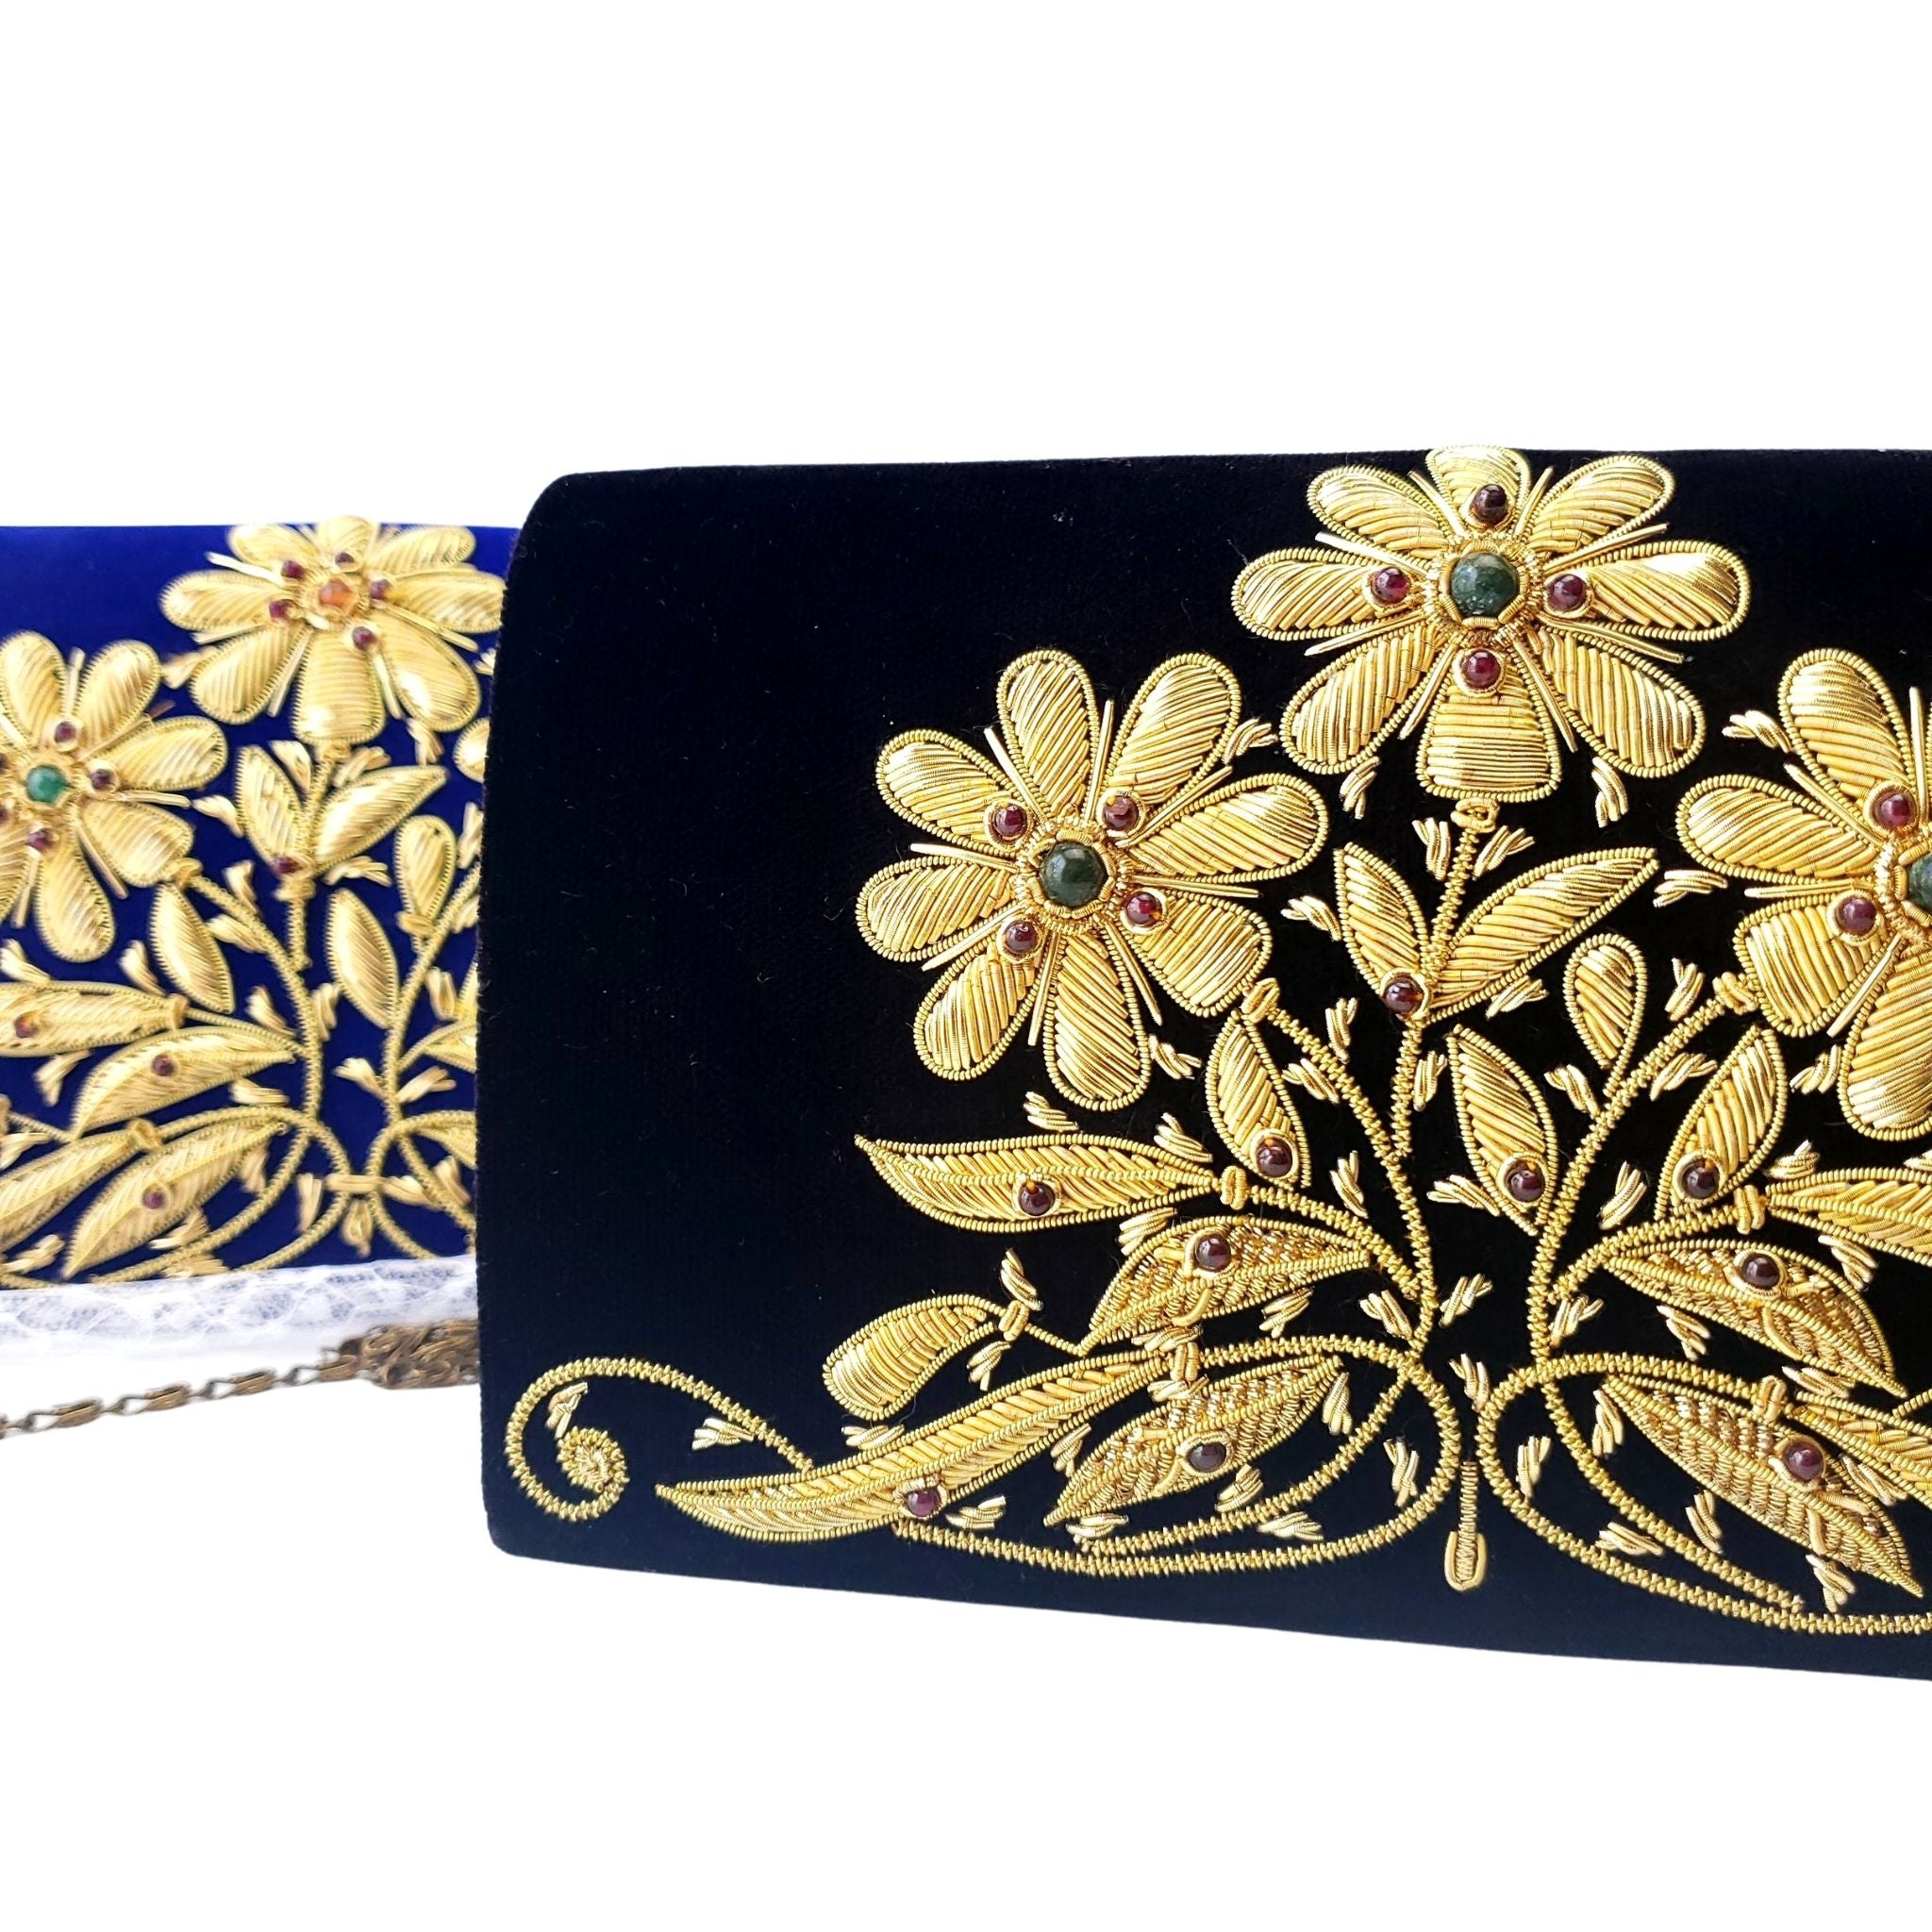 Golden Color Velvet Box Clutch Bag with Hand Zardosi Work